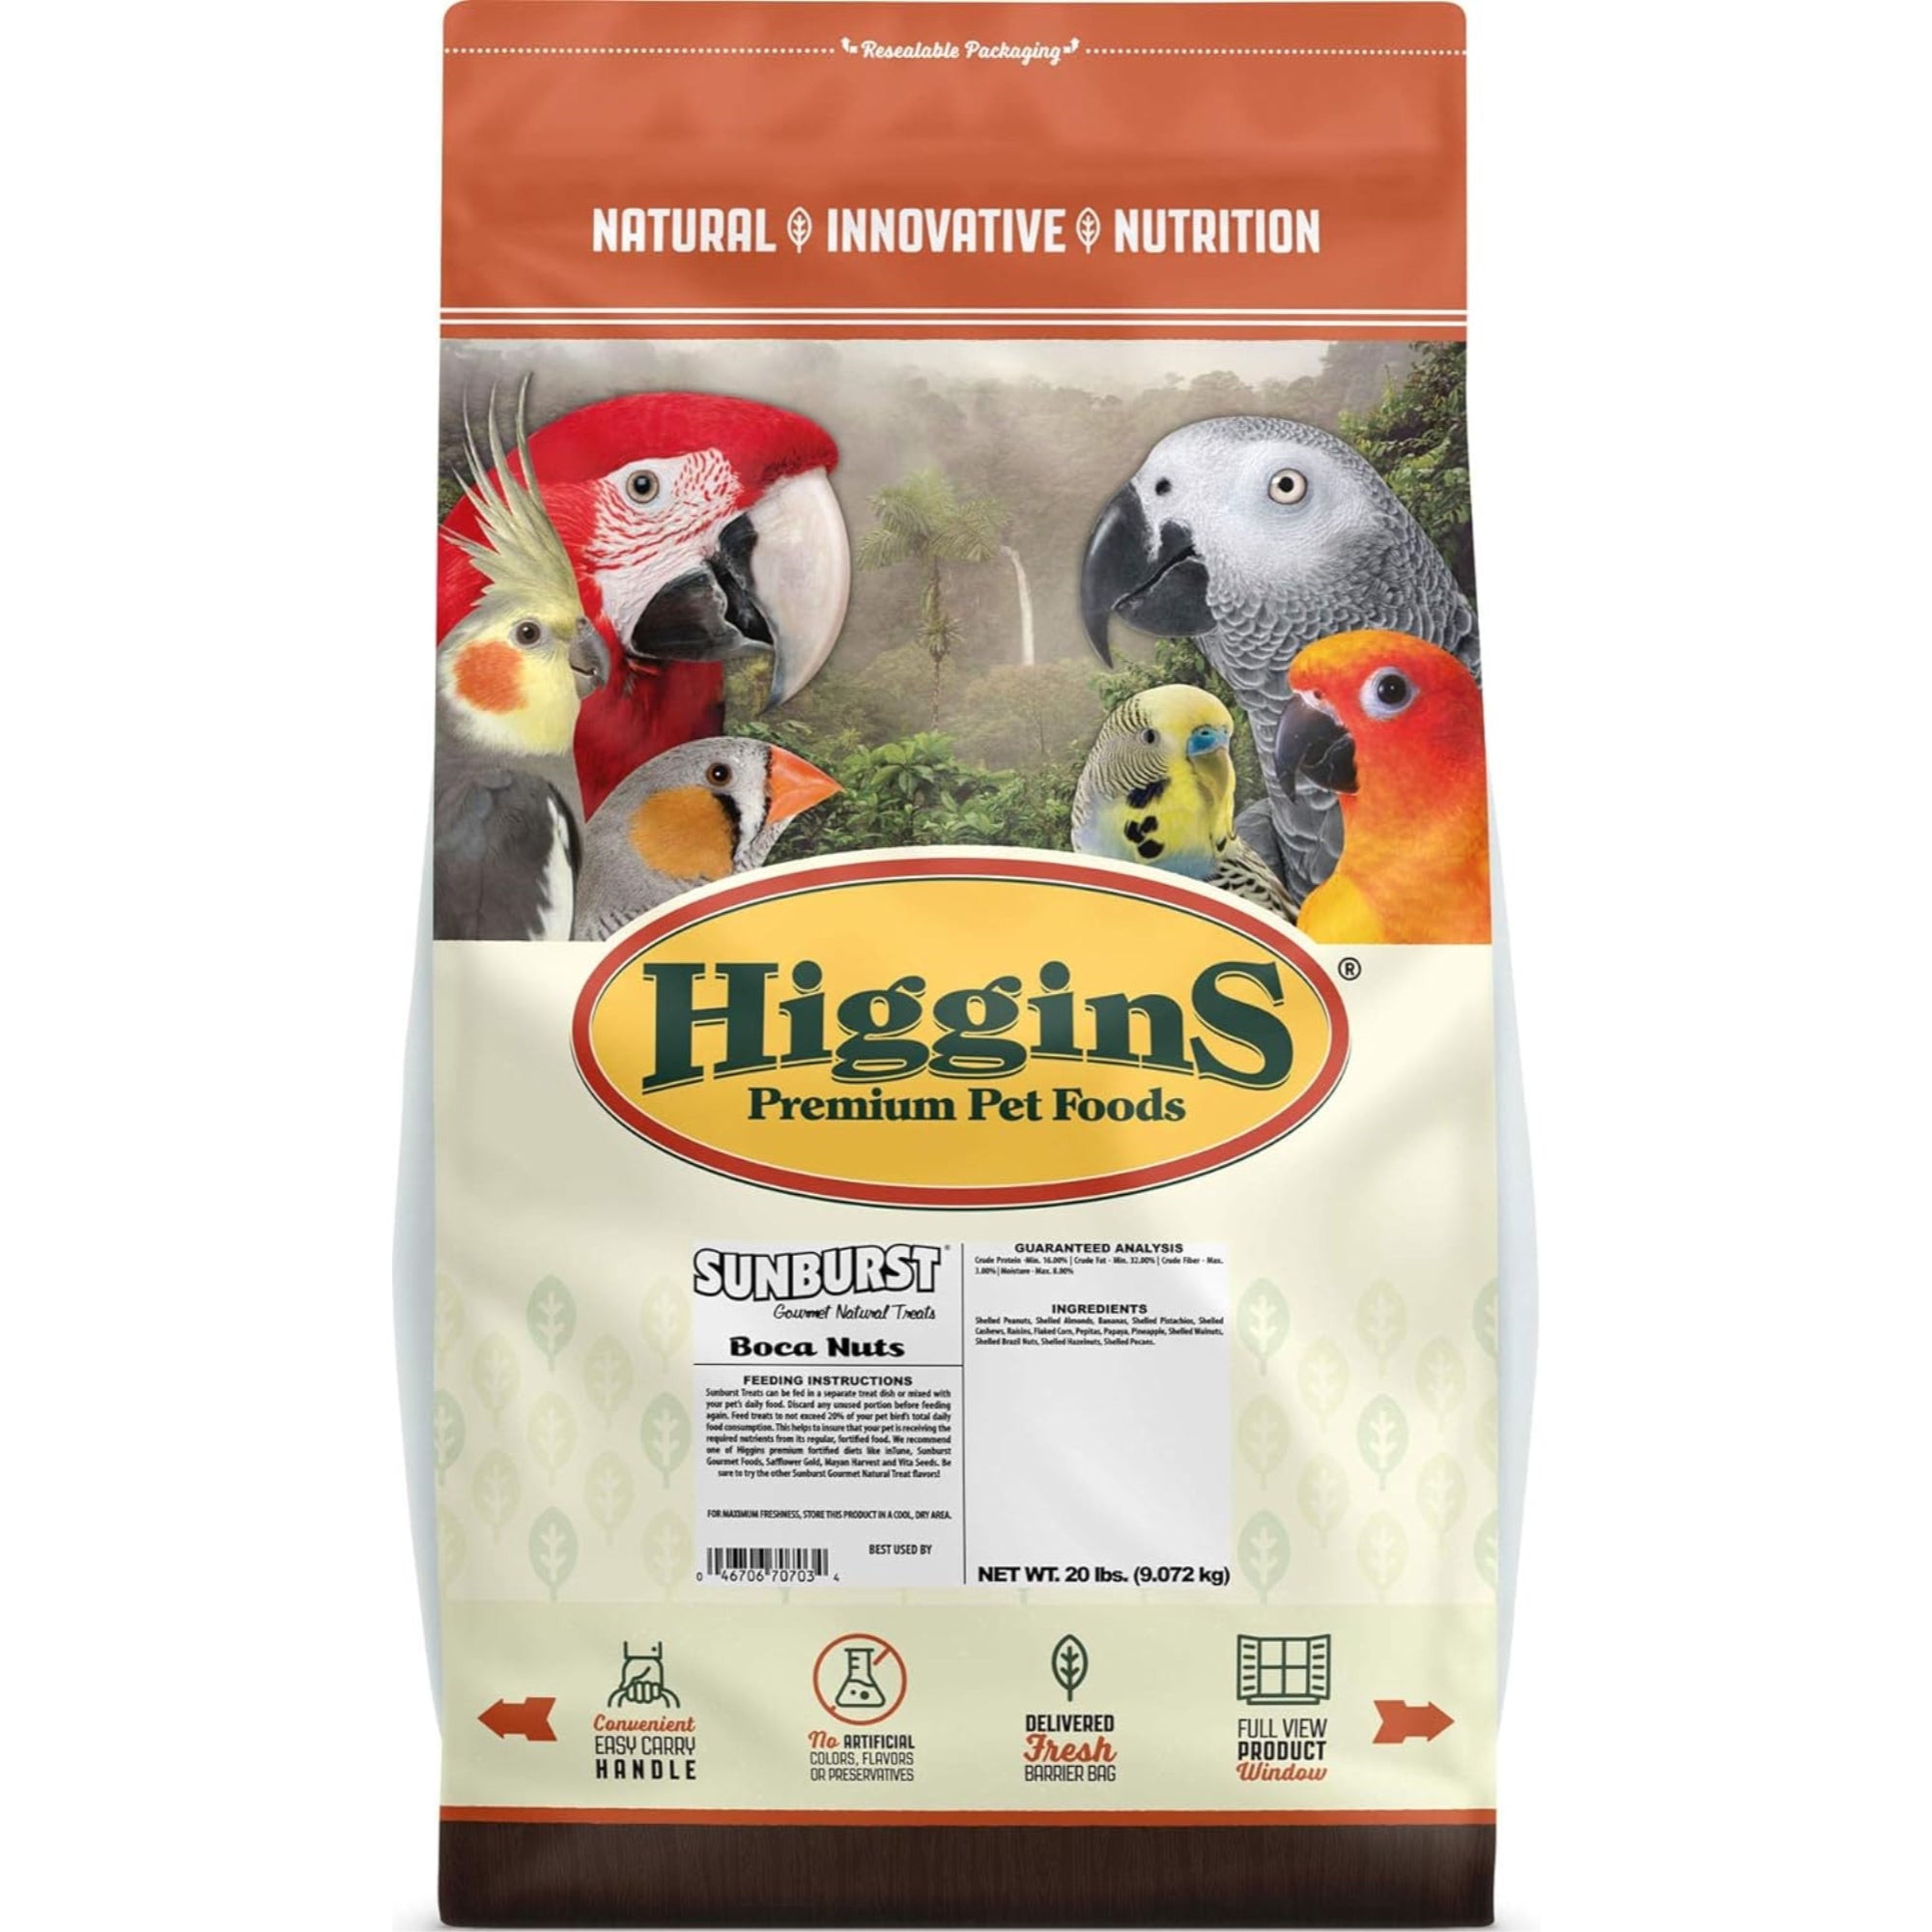 Higgins Sunburst Gourmet Bird Treats, Shelled Boca Nuts for Parrots and Macaws, 20lbs